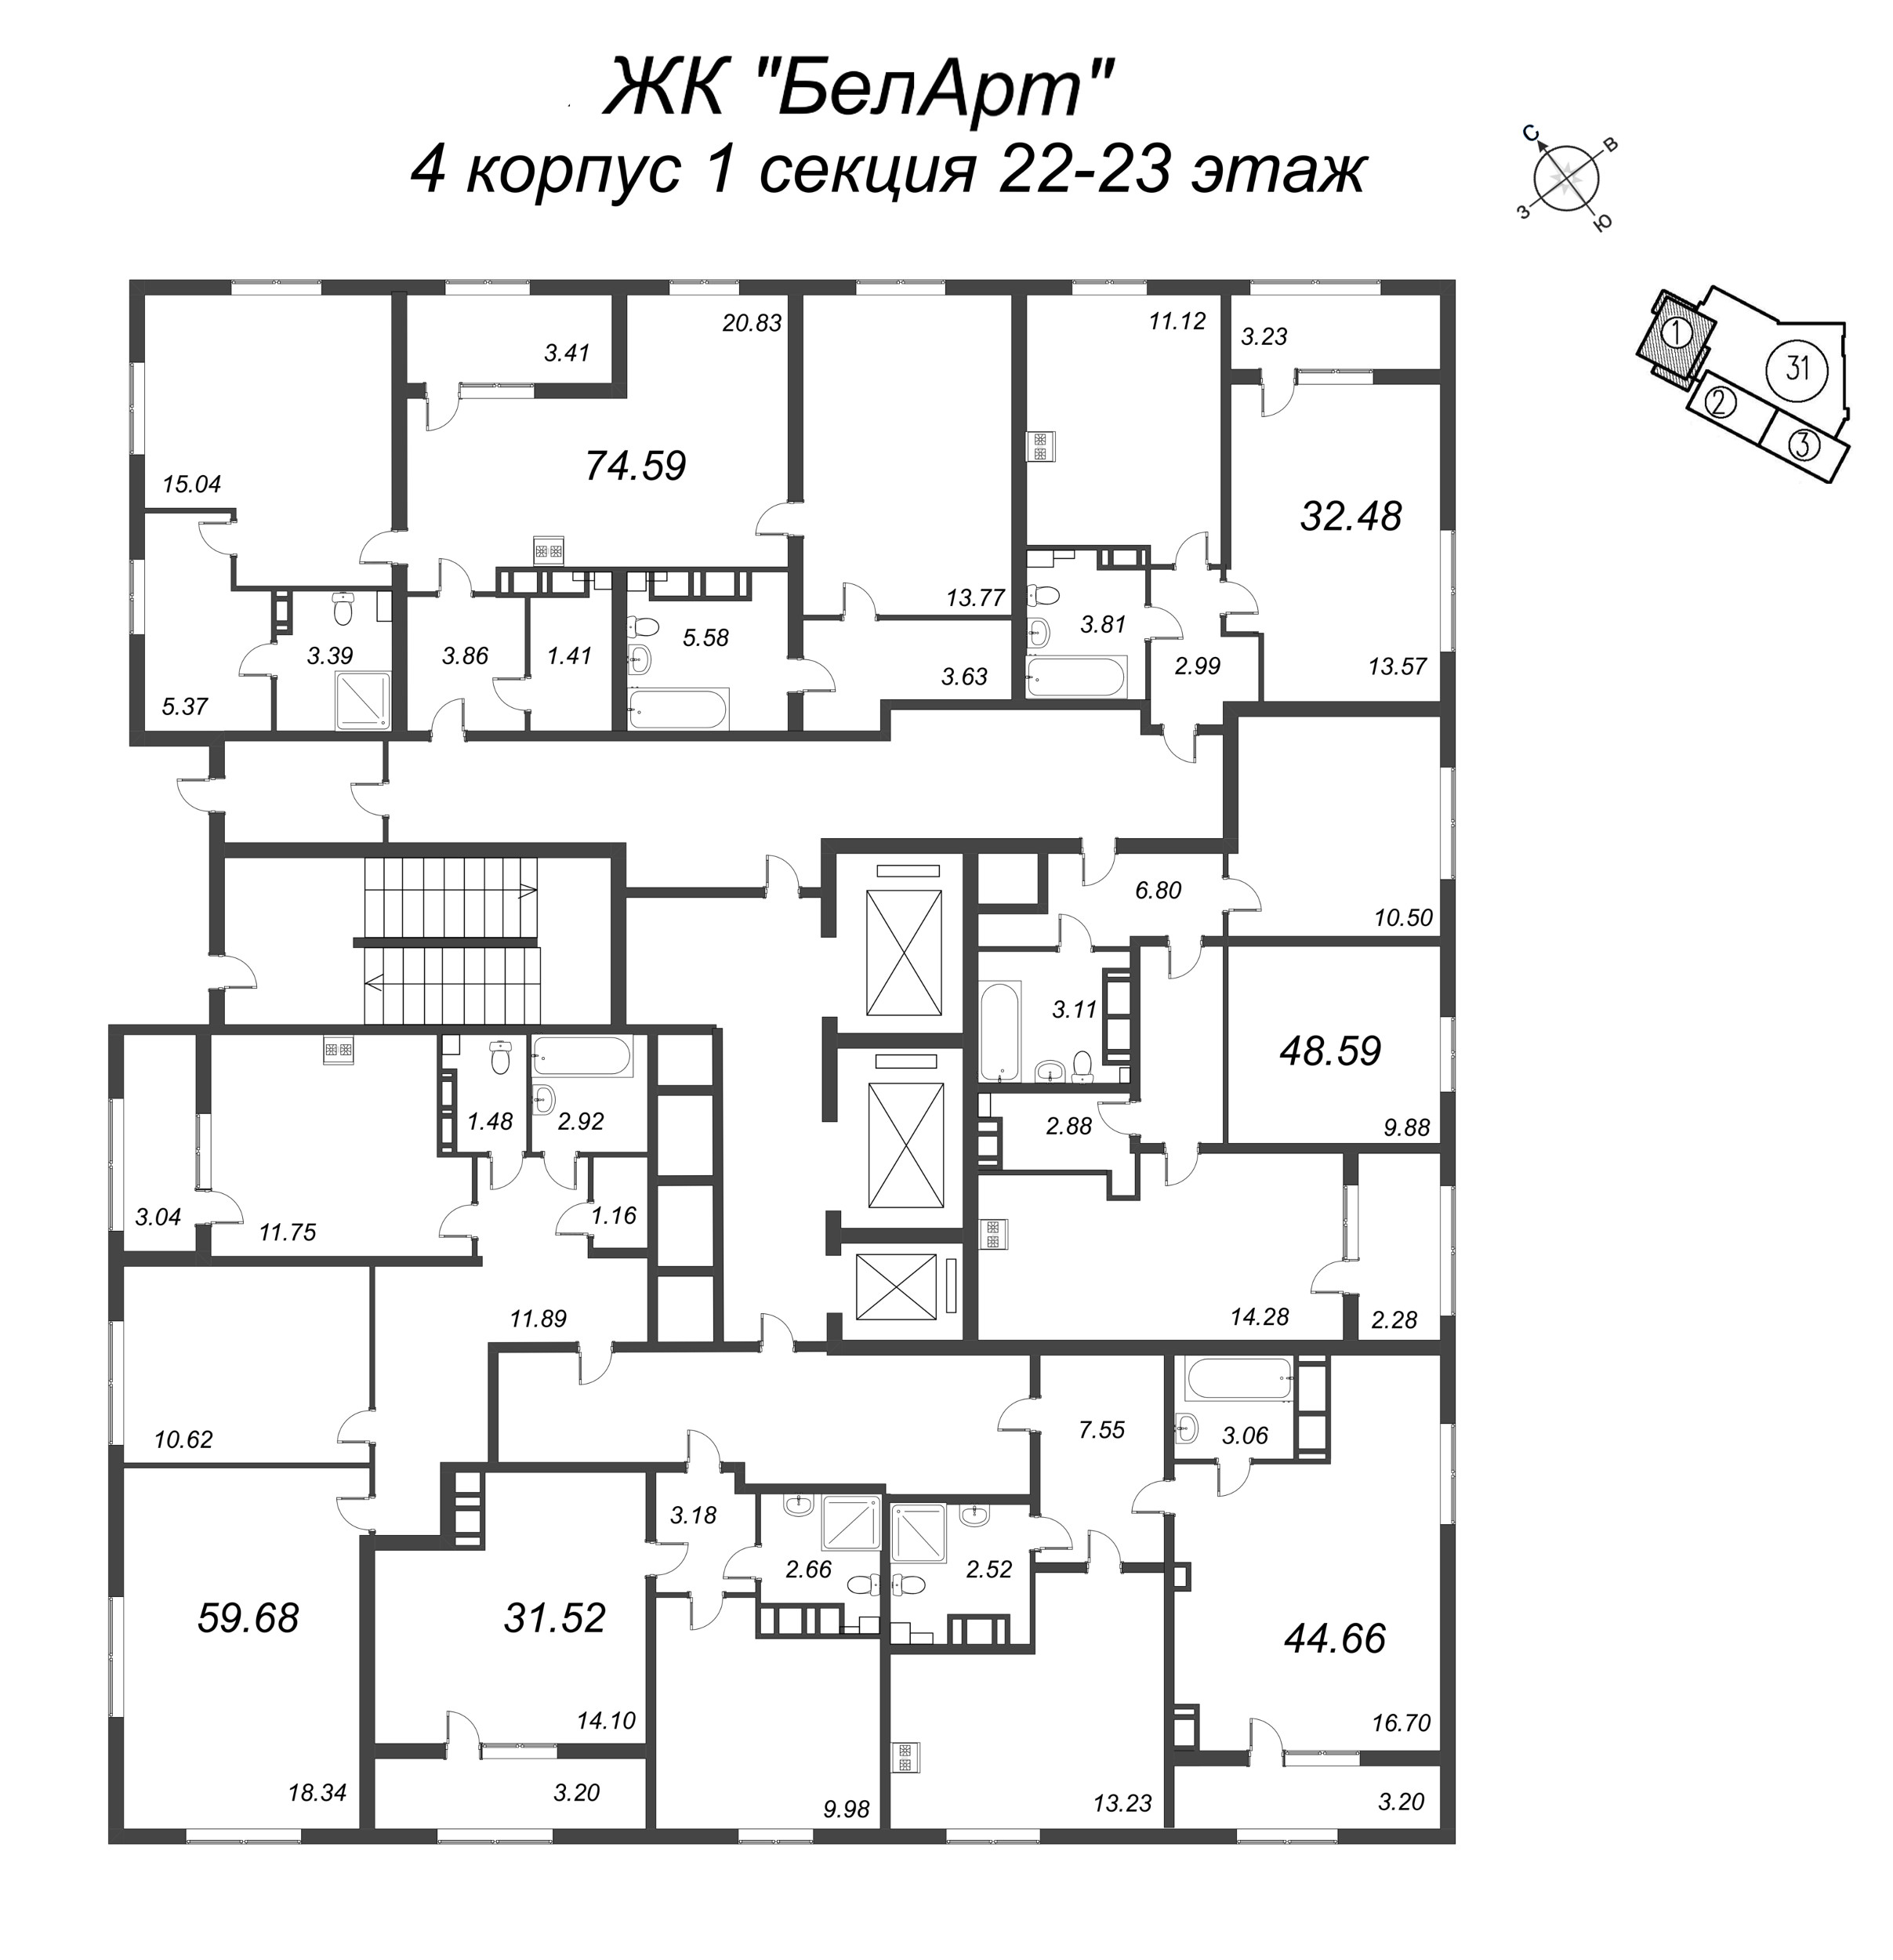 2-комнатная квартира, 59.68 м² в ЖК "БелАрт" - планировка этажа